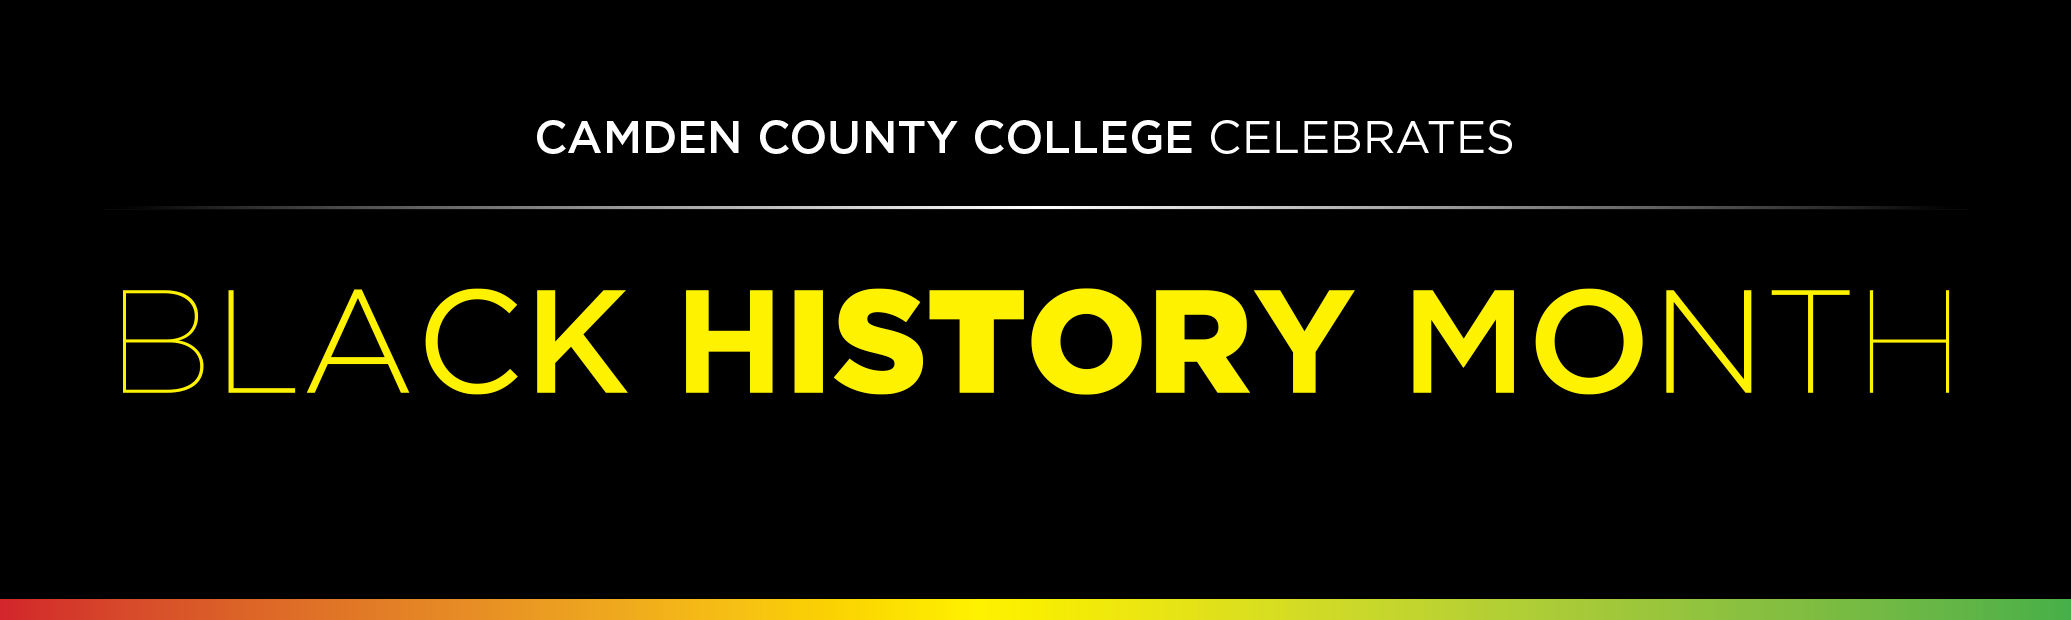 Camden County College Celebrates Black History Month